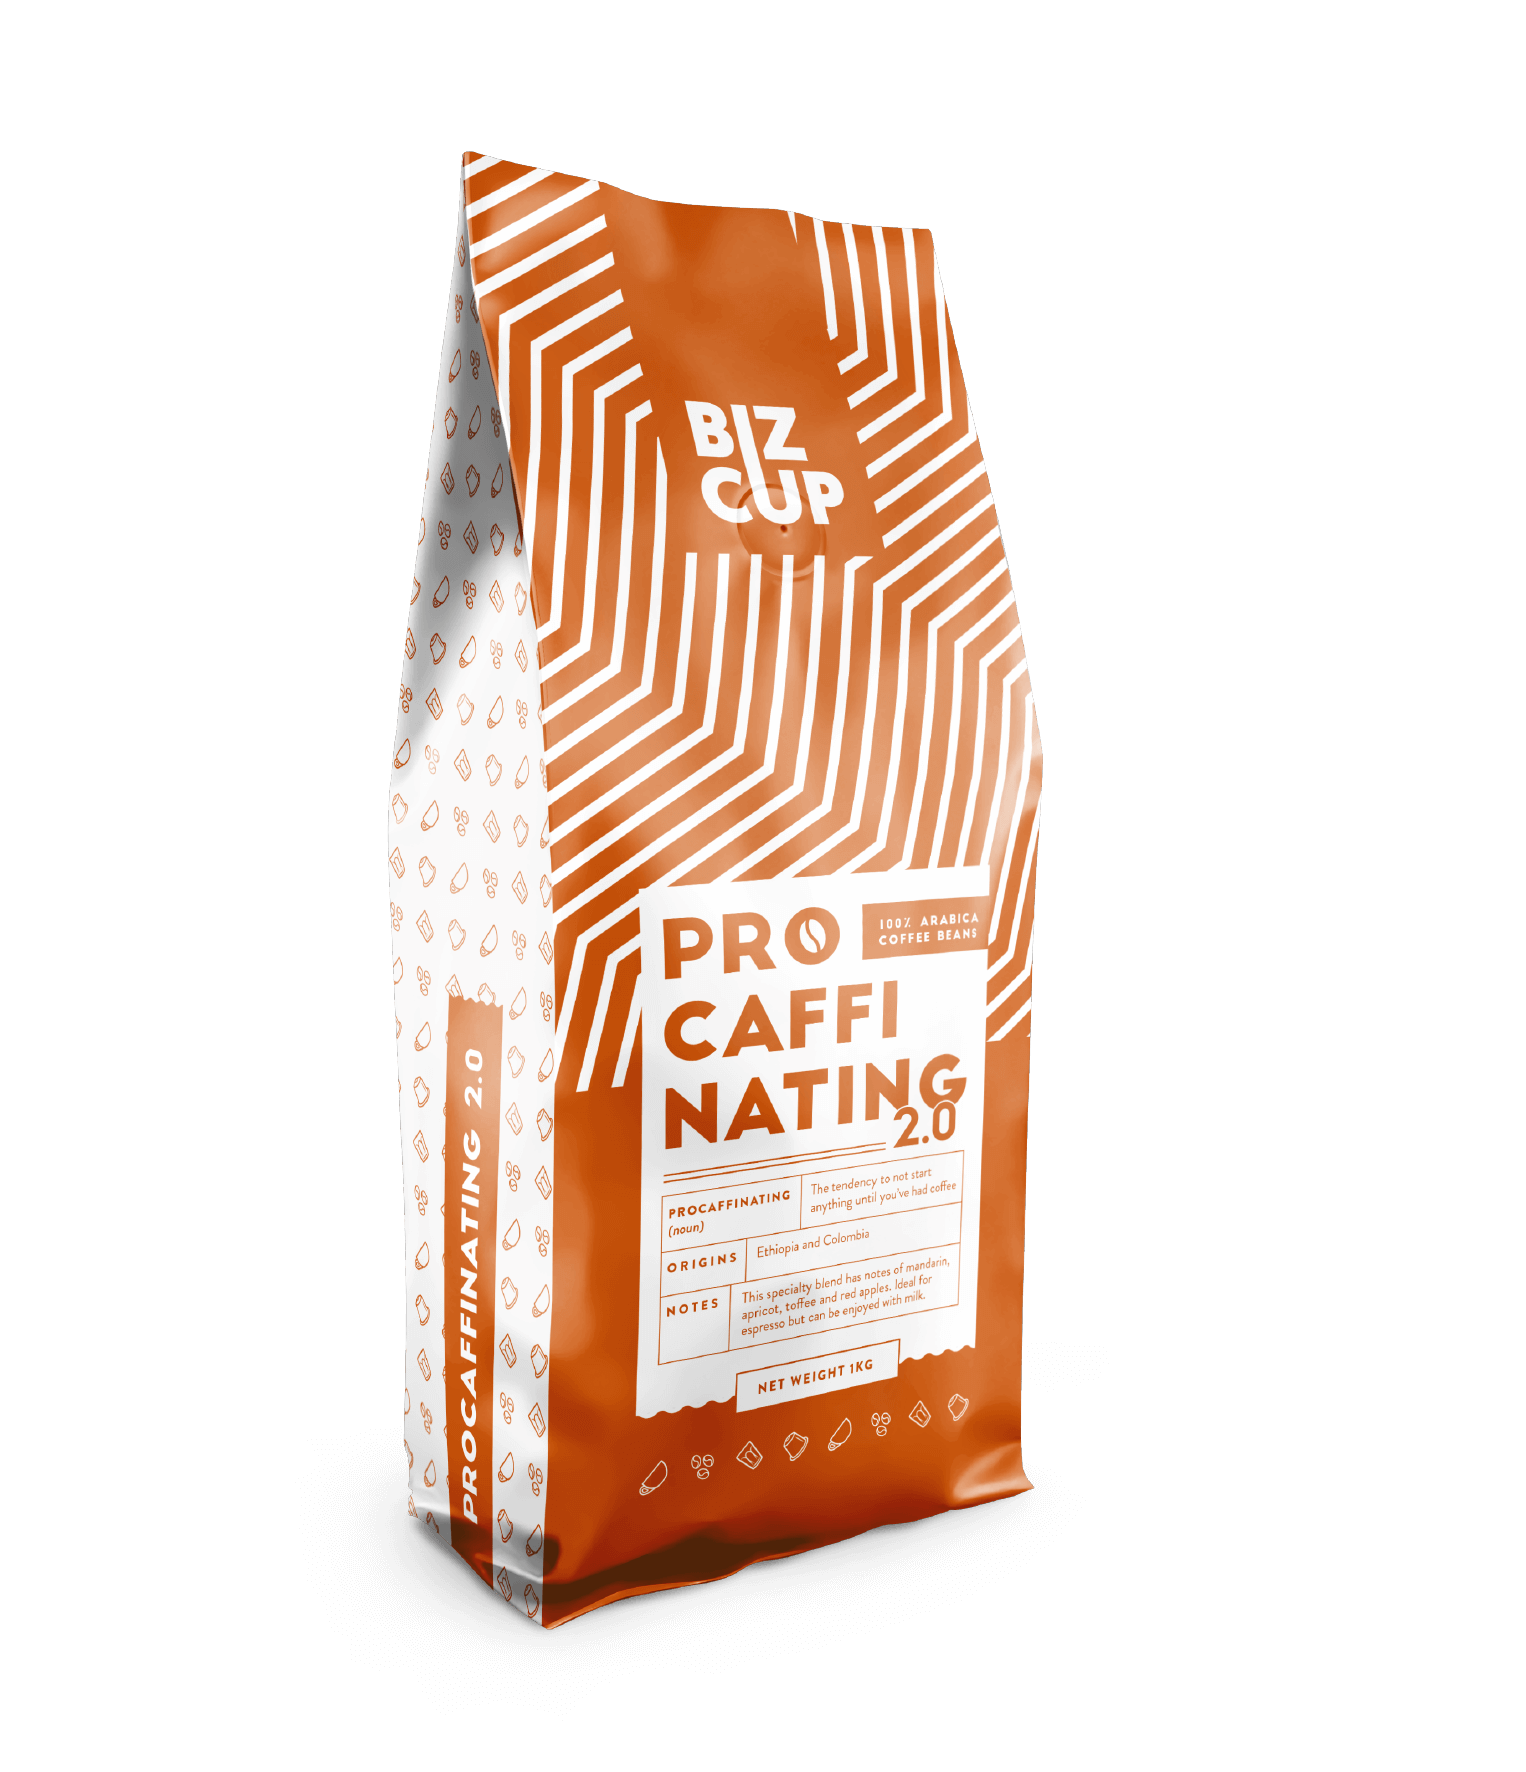 Bizcup Procaffinating 2.0 Coffee Blend